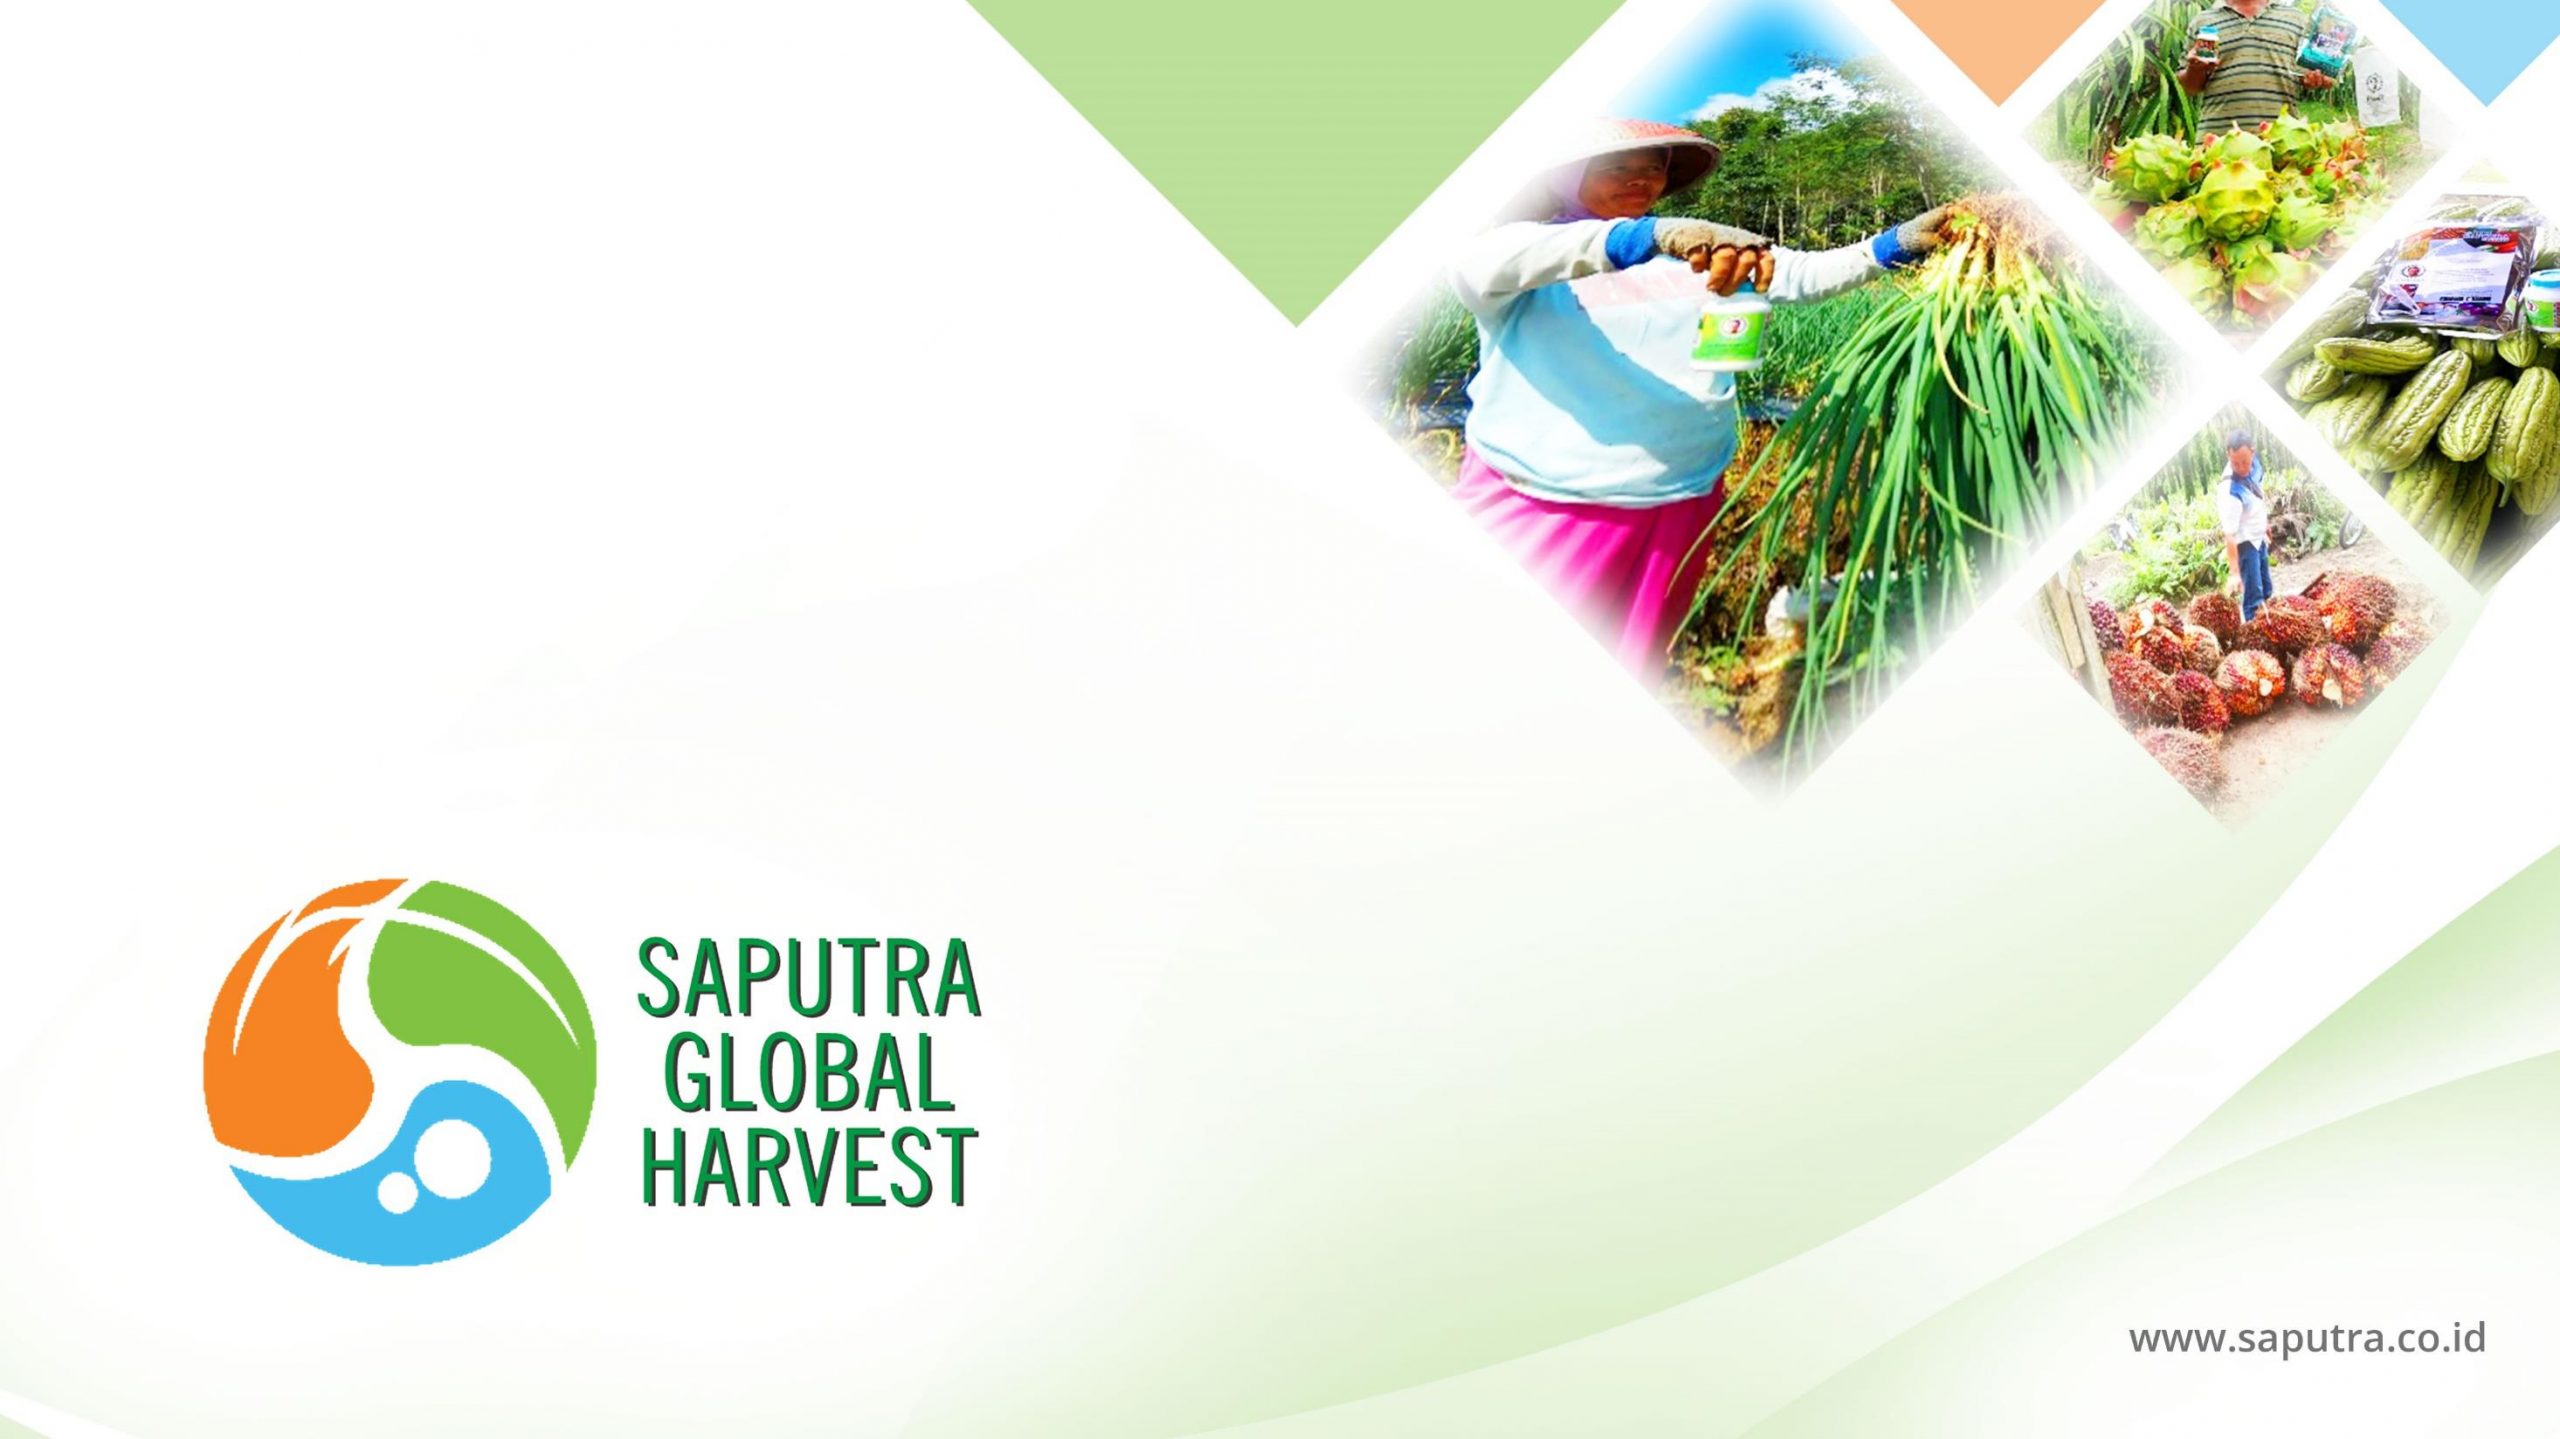 Saputra Global Harvest